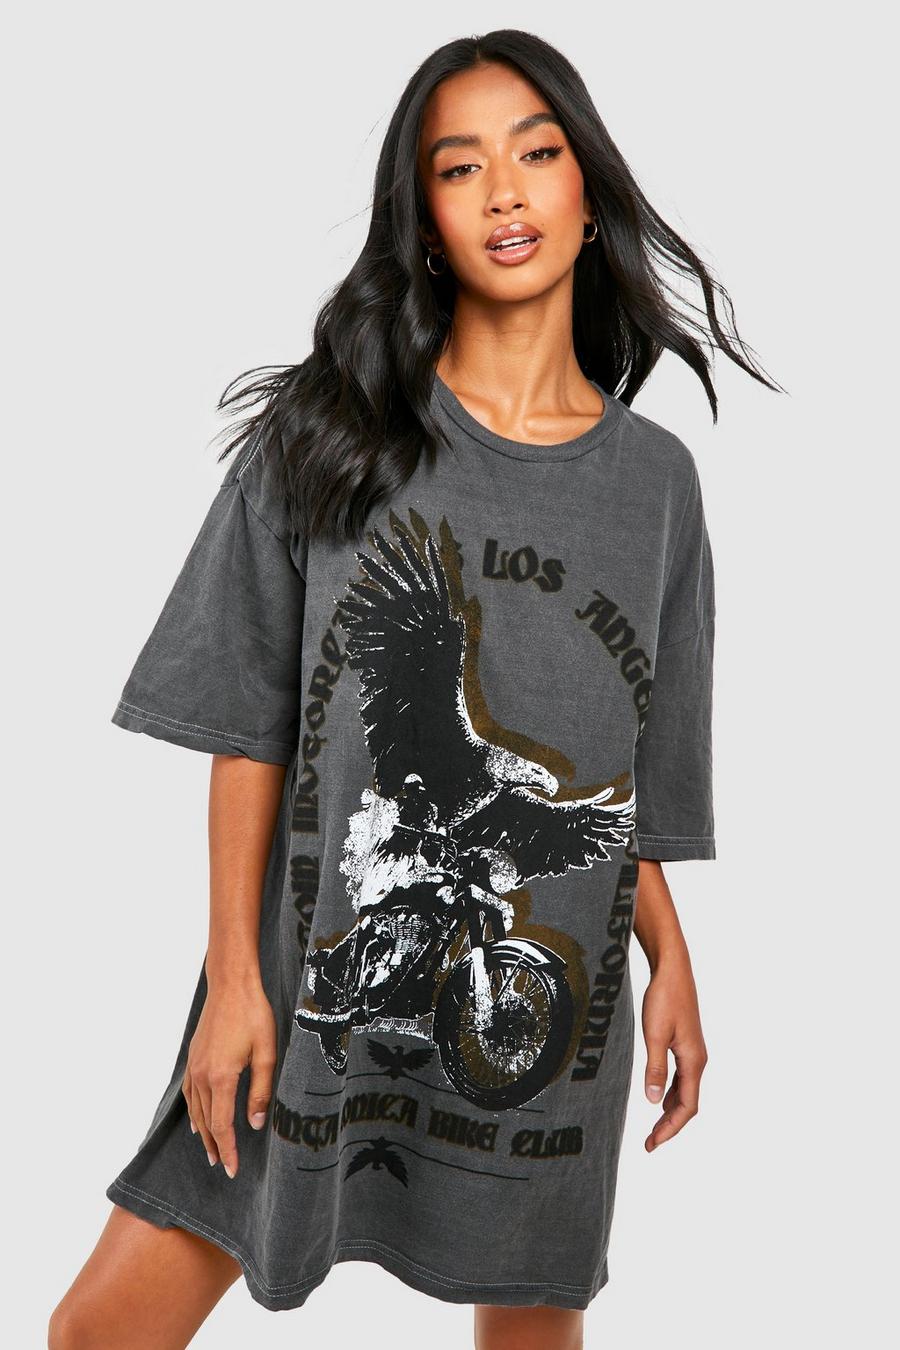 Petite - Robe t-shirt oversize à slogan moto, Charcoal grey